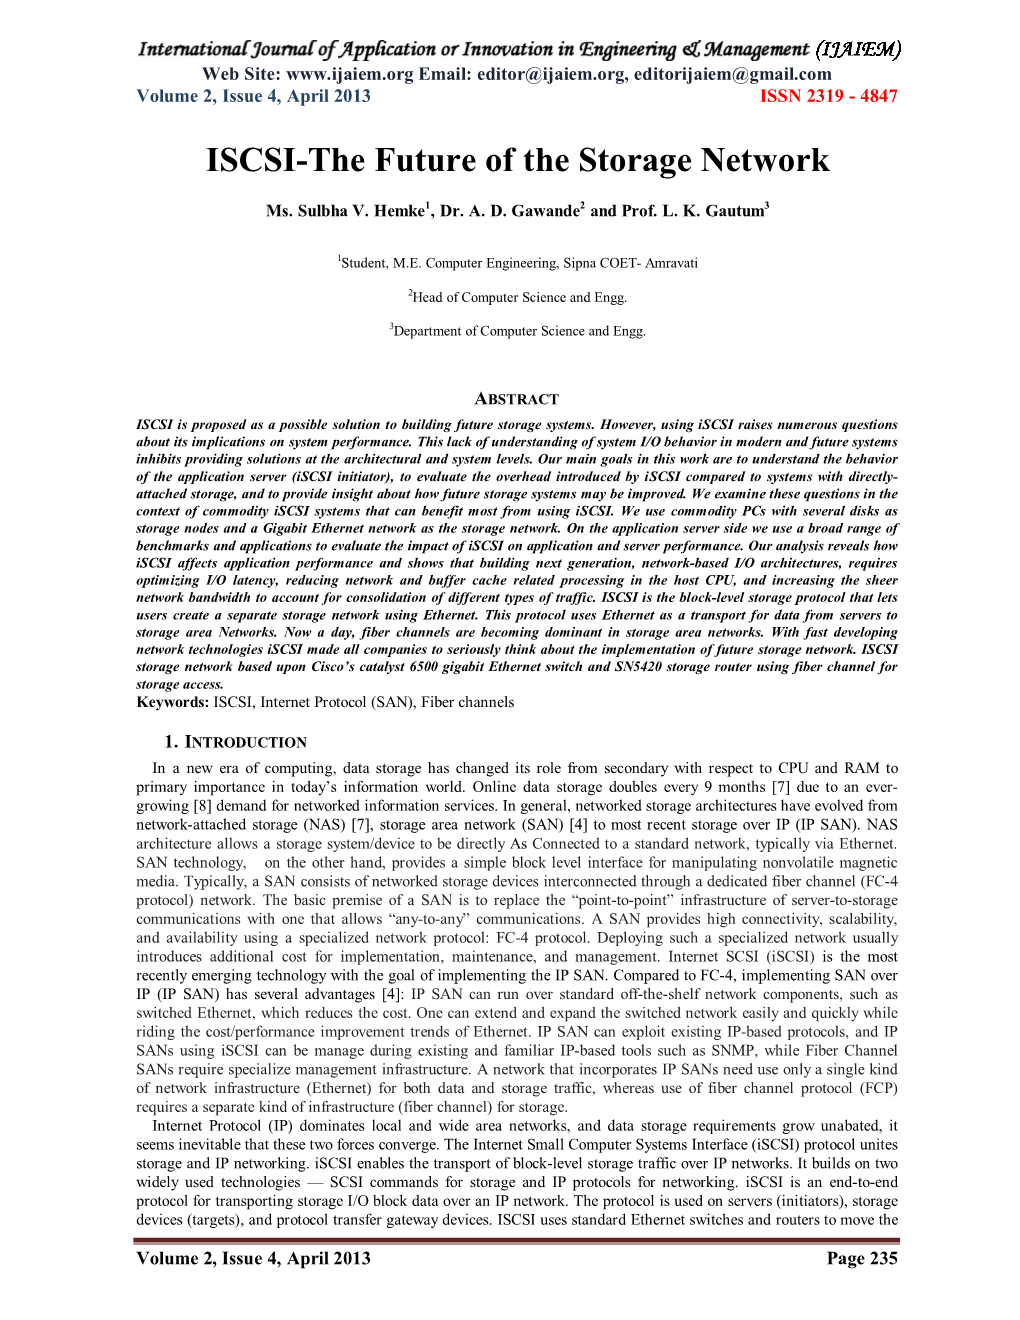 ISCSI-The Future of the Storage Network